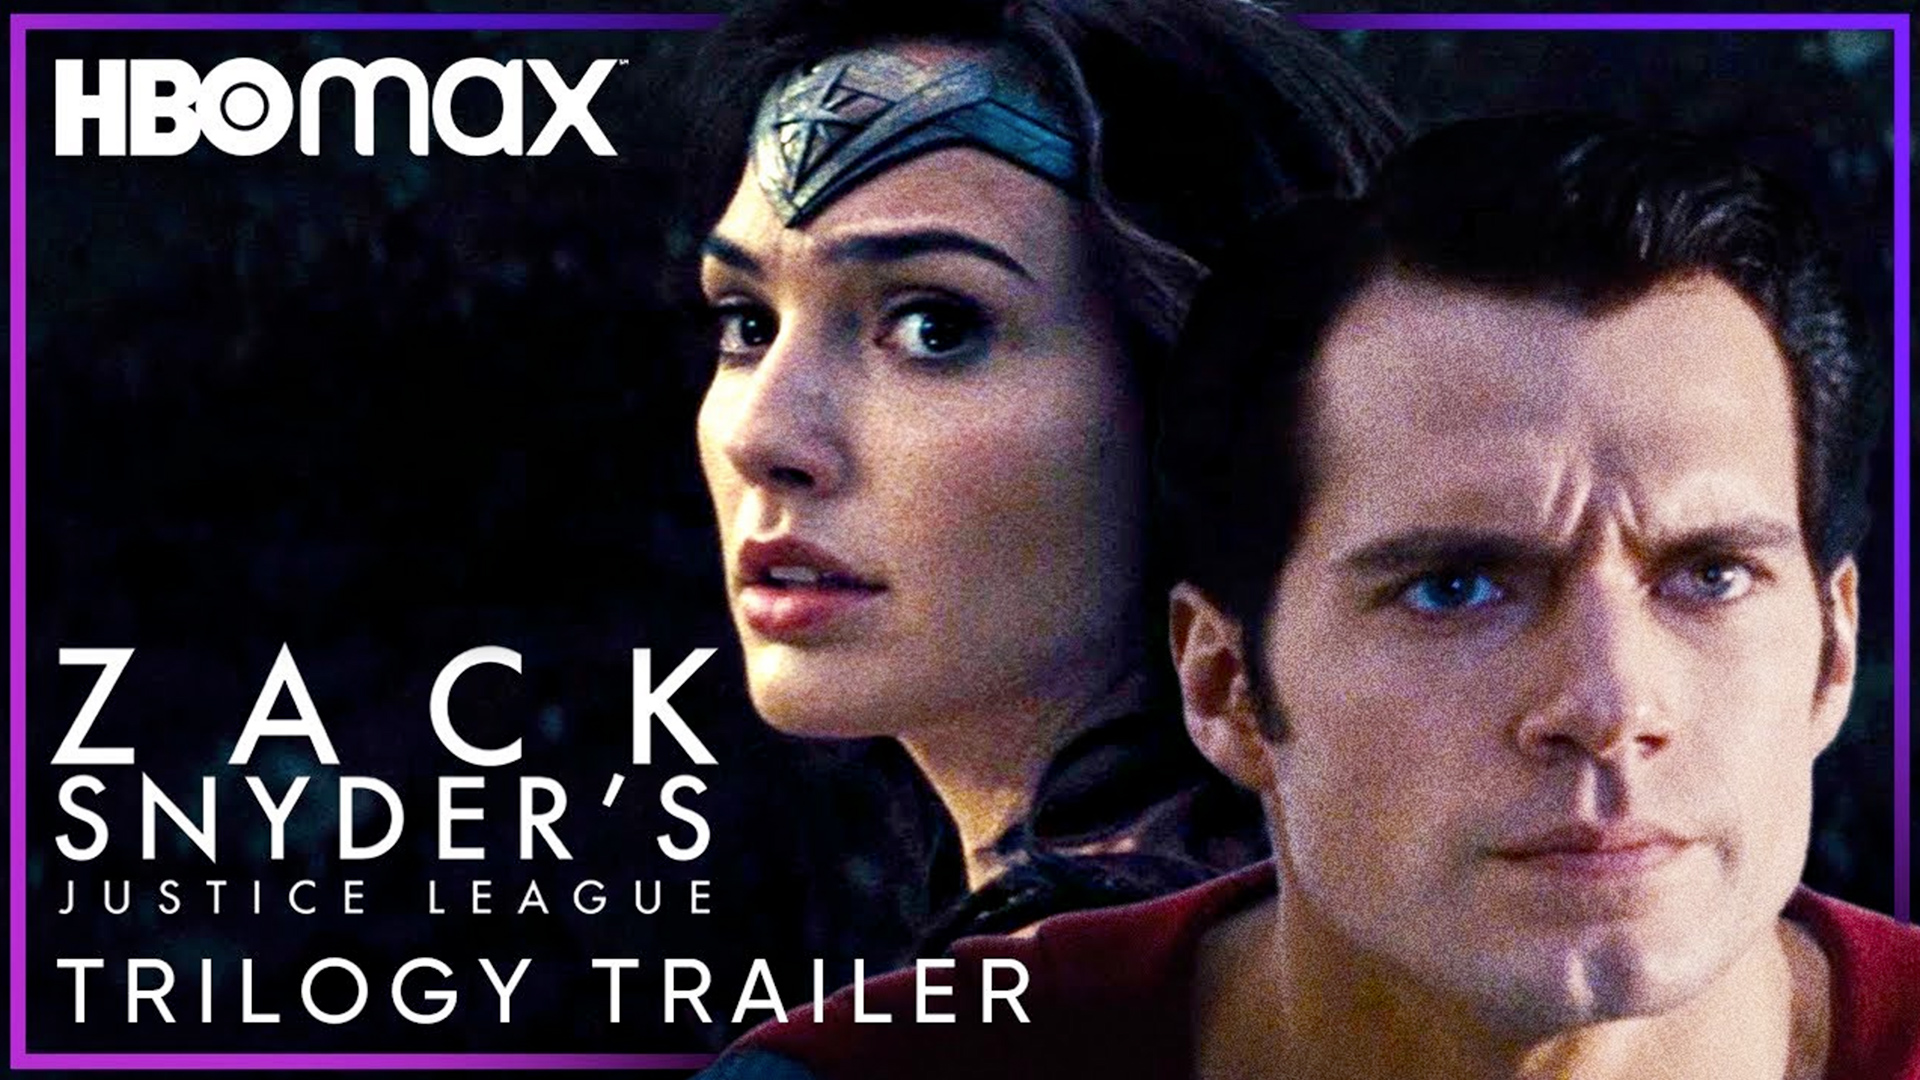 HBO Max Zack Snyder Trilogy Trailer